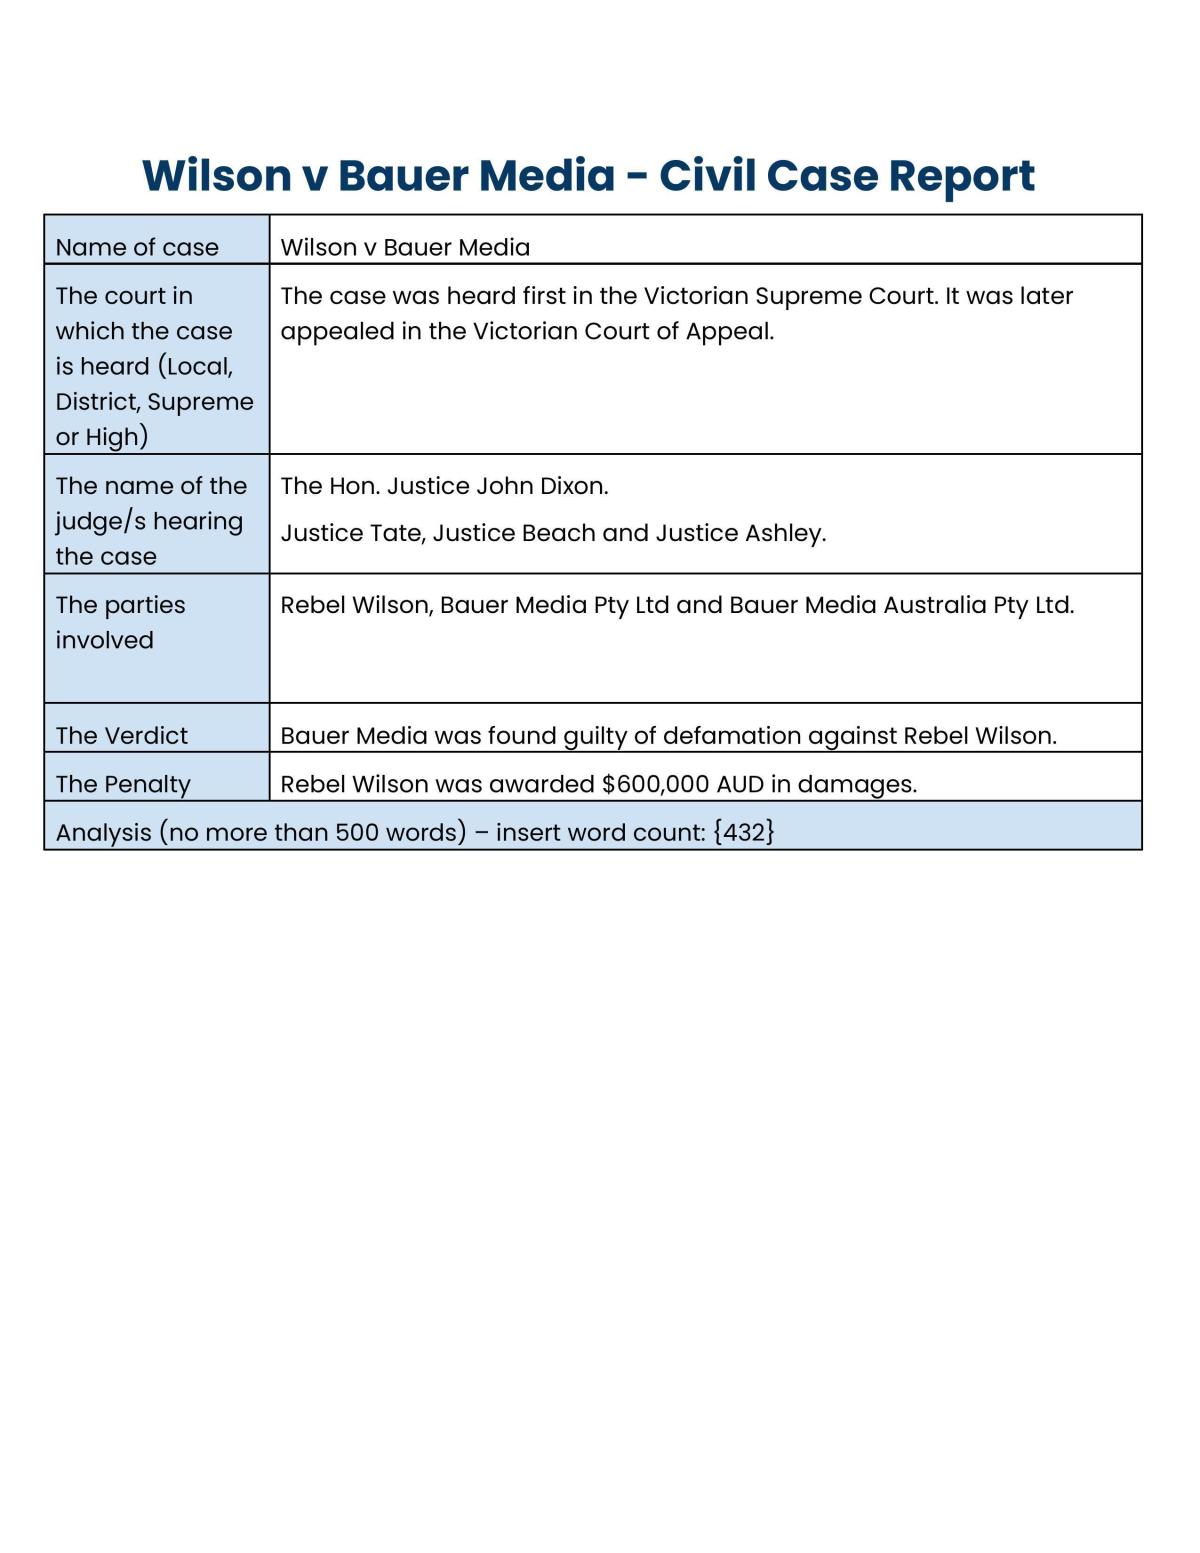 Wilson V Bauer Media - Civil Case Report - Page 1